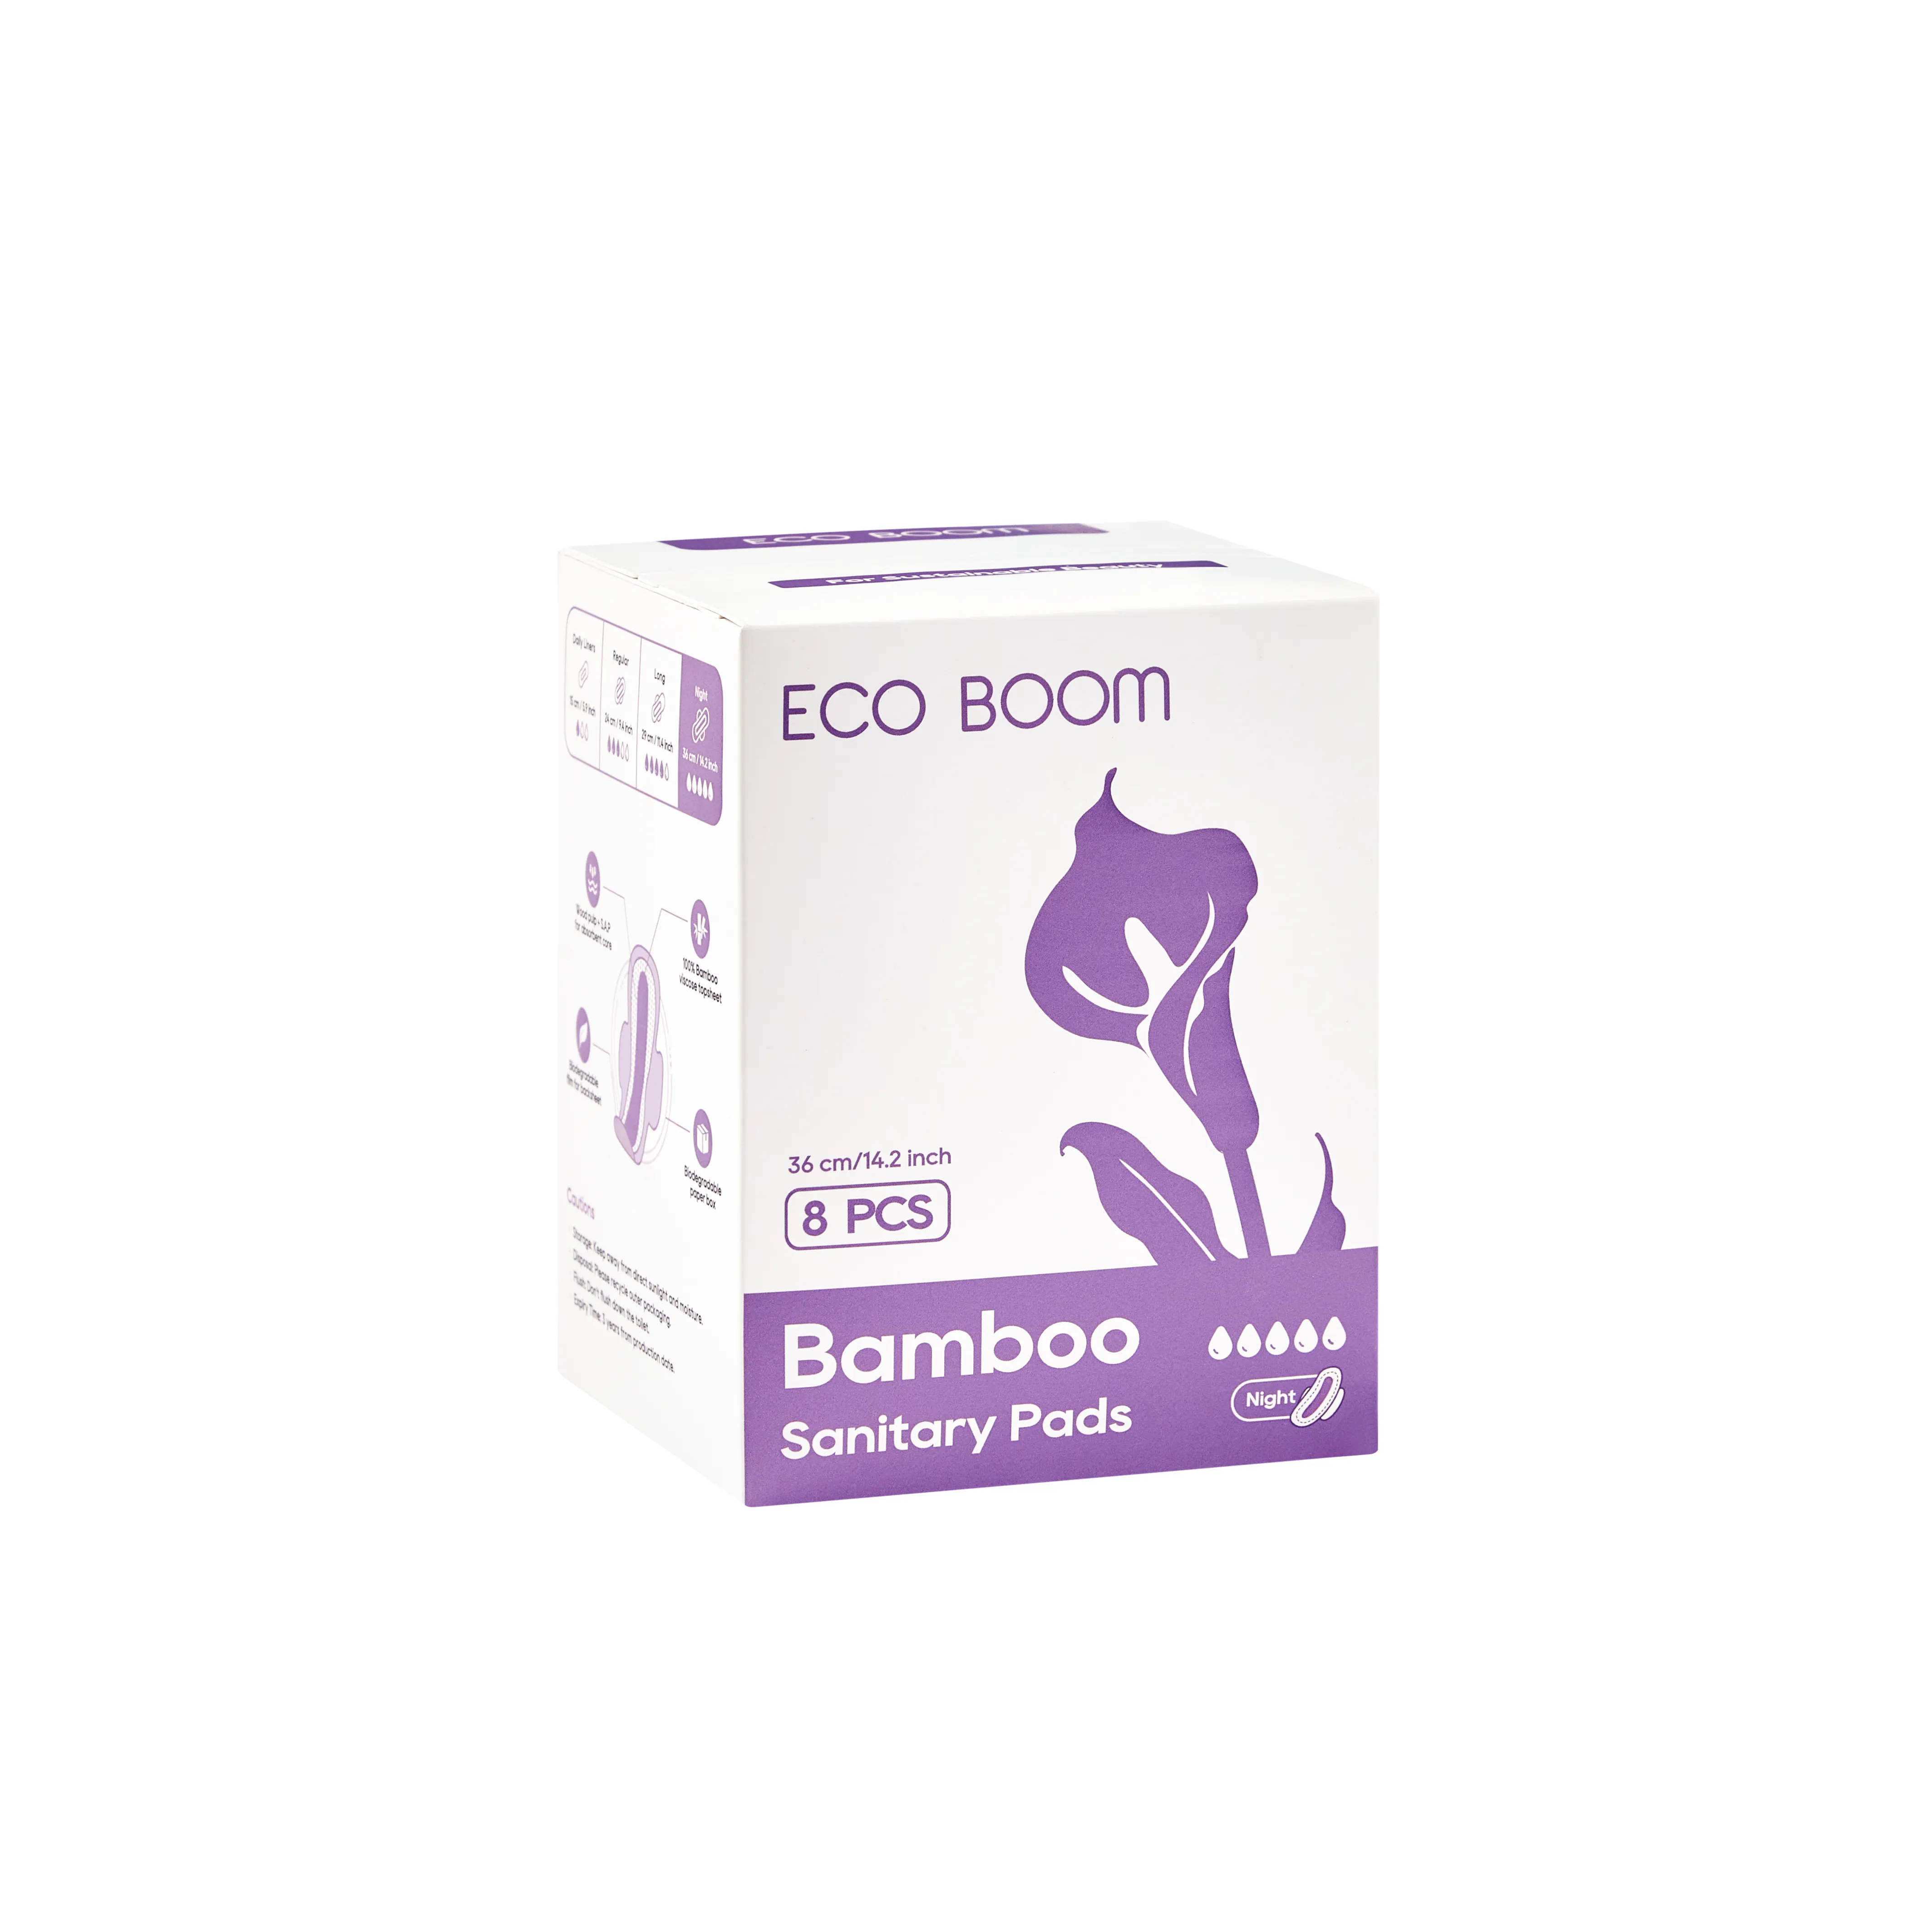 ECO BOOM panty liner organik massal wanita kustom pembalut katun feminin bantalan menstruasi untuk wanita